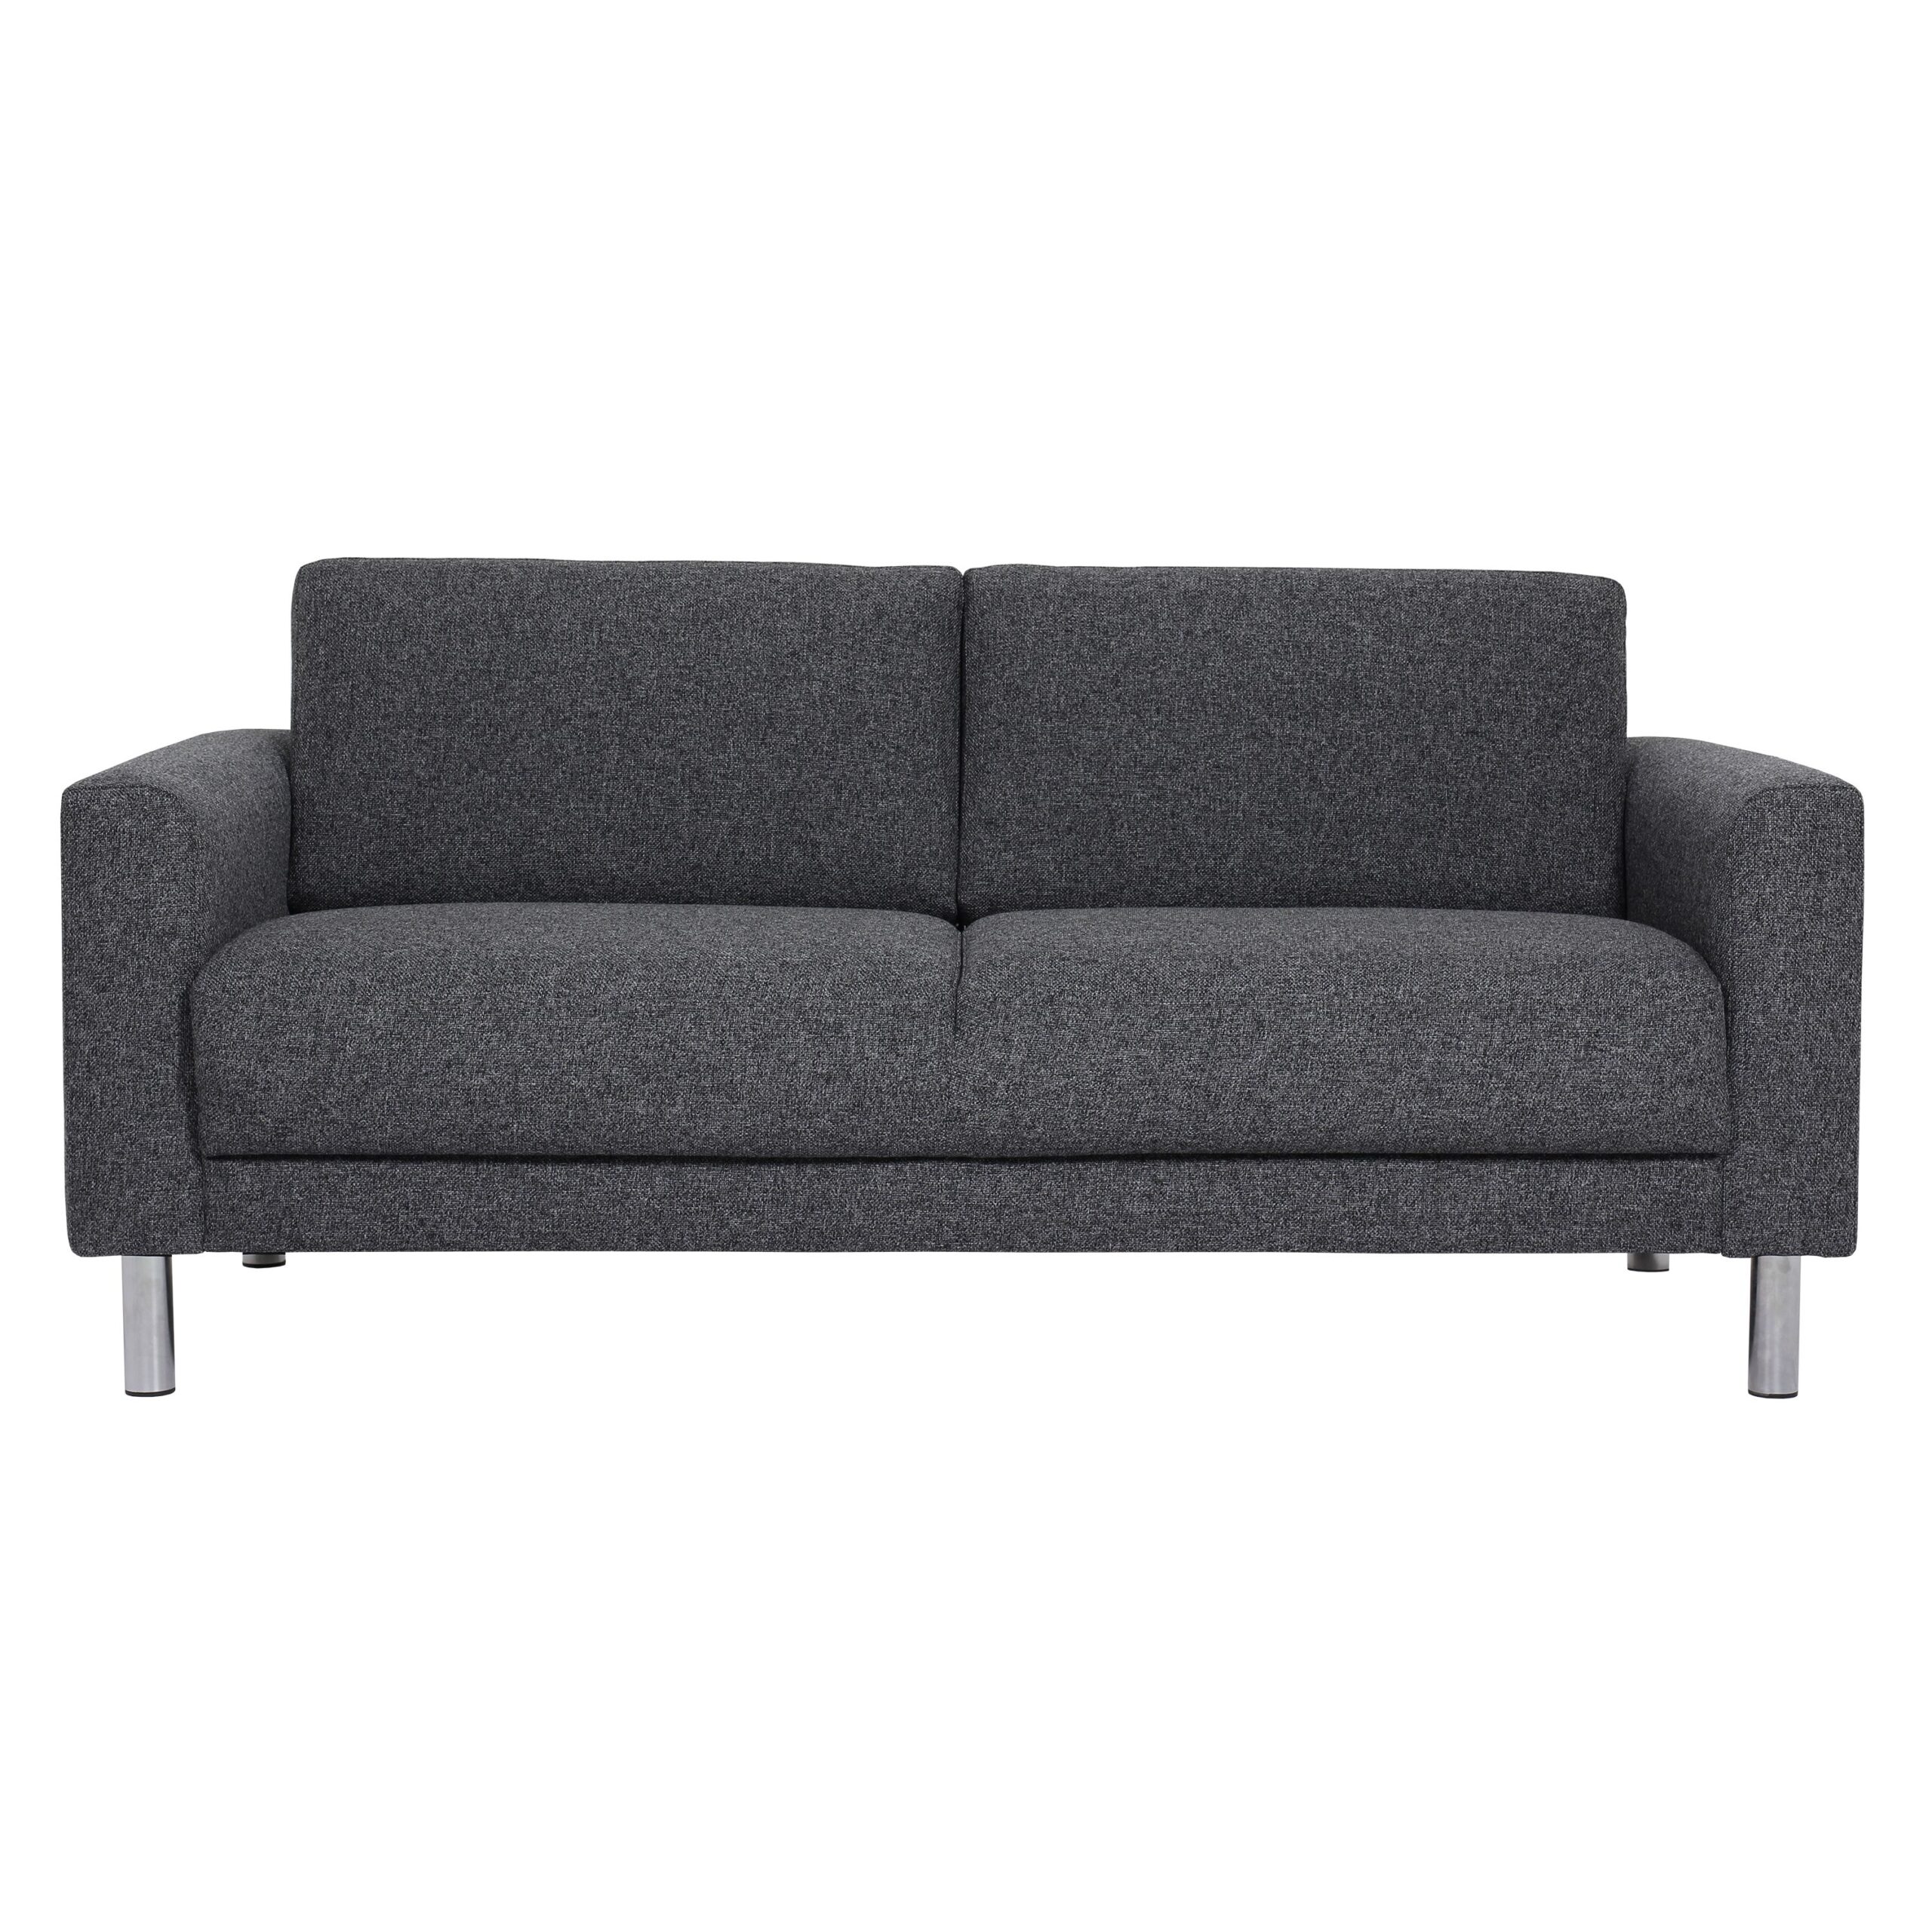 Mex Black 2 Seater Sofa